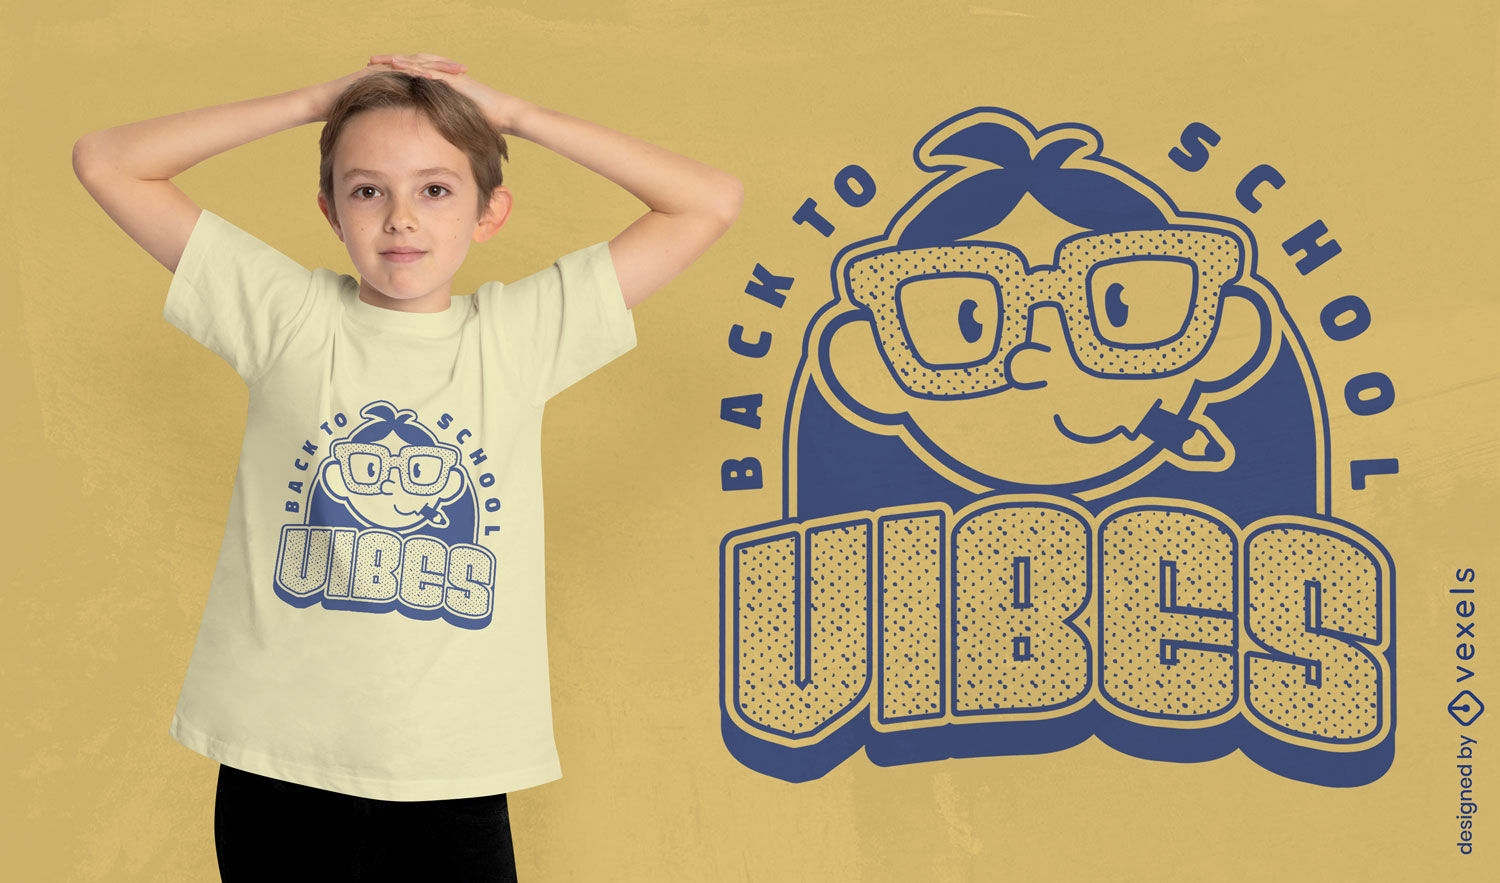 Zurück zu Schule nerdy Kinder-T-Shirt-Design